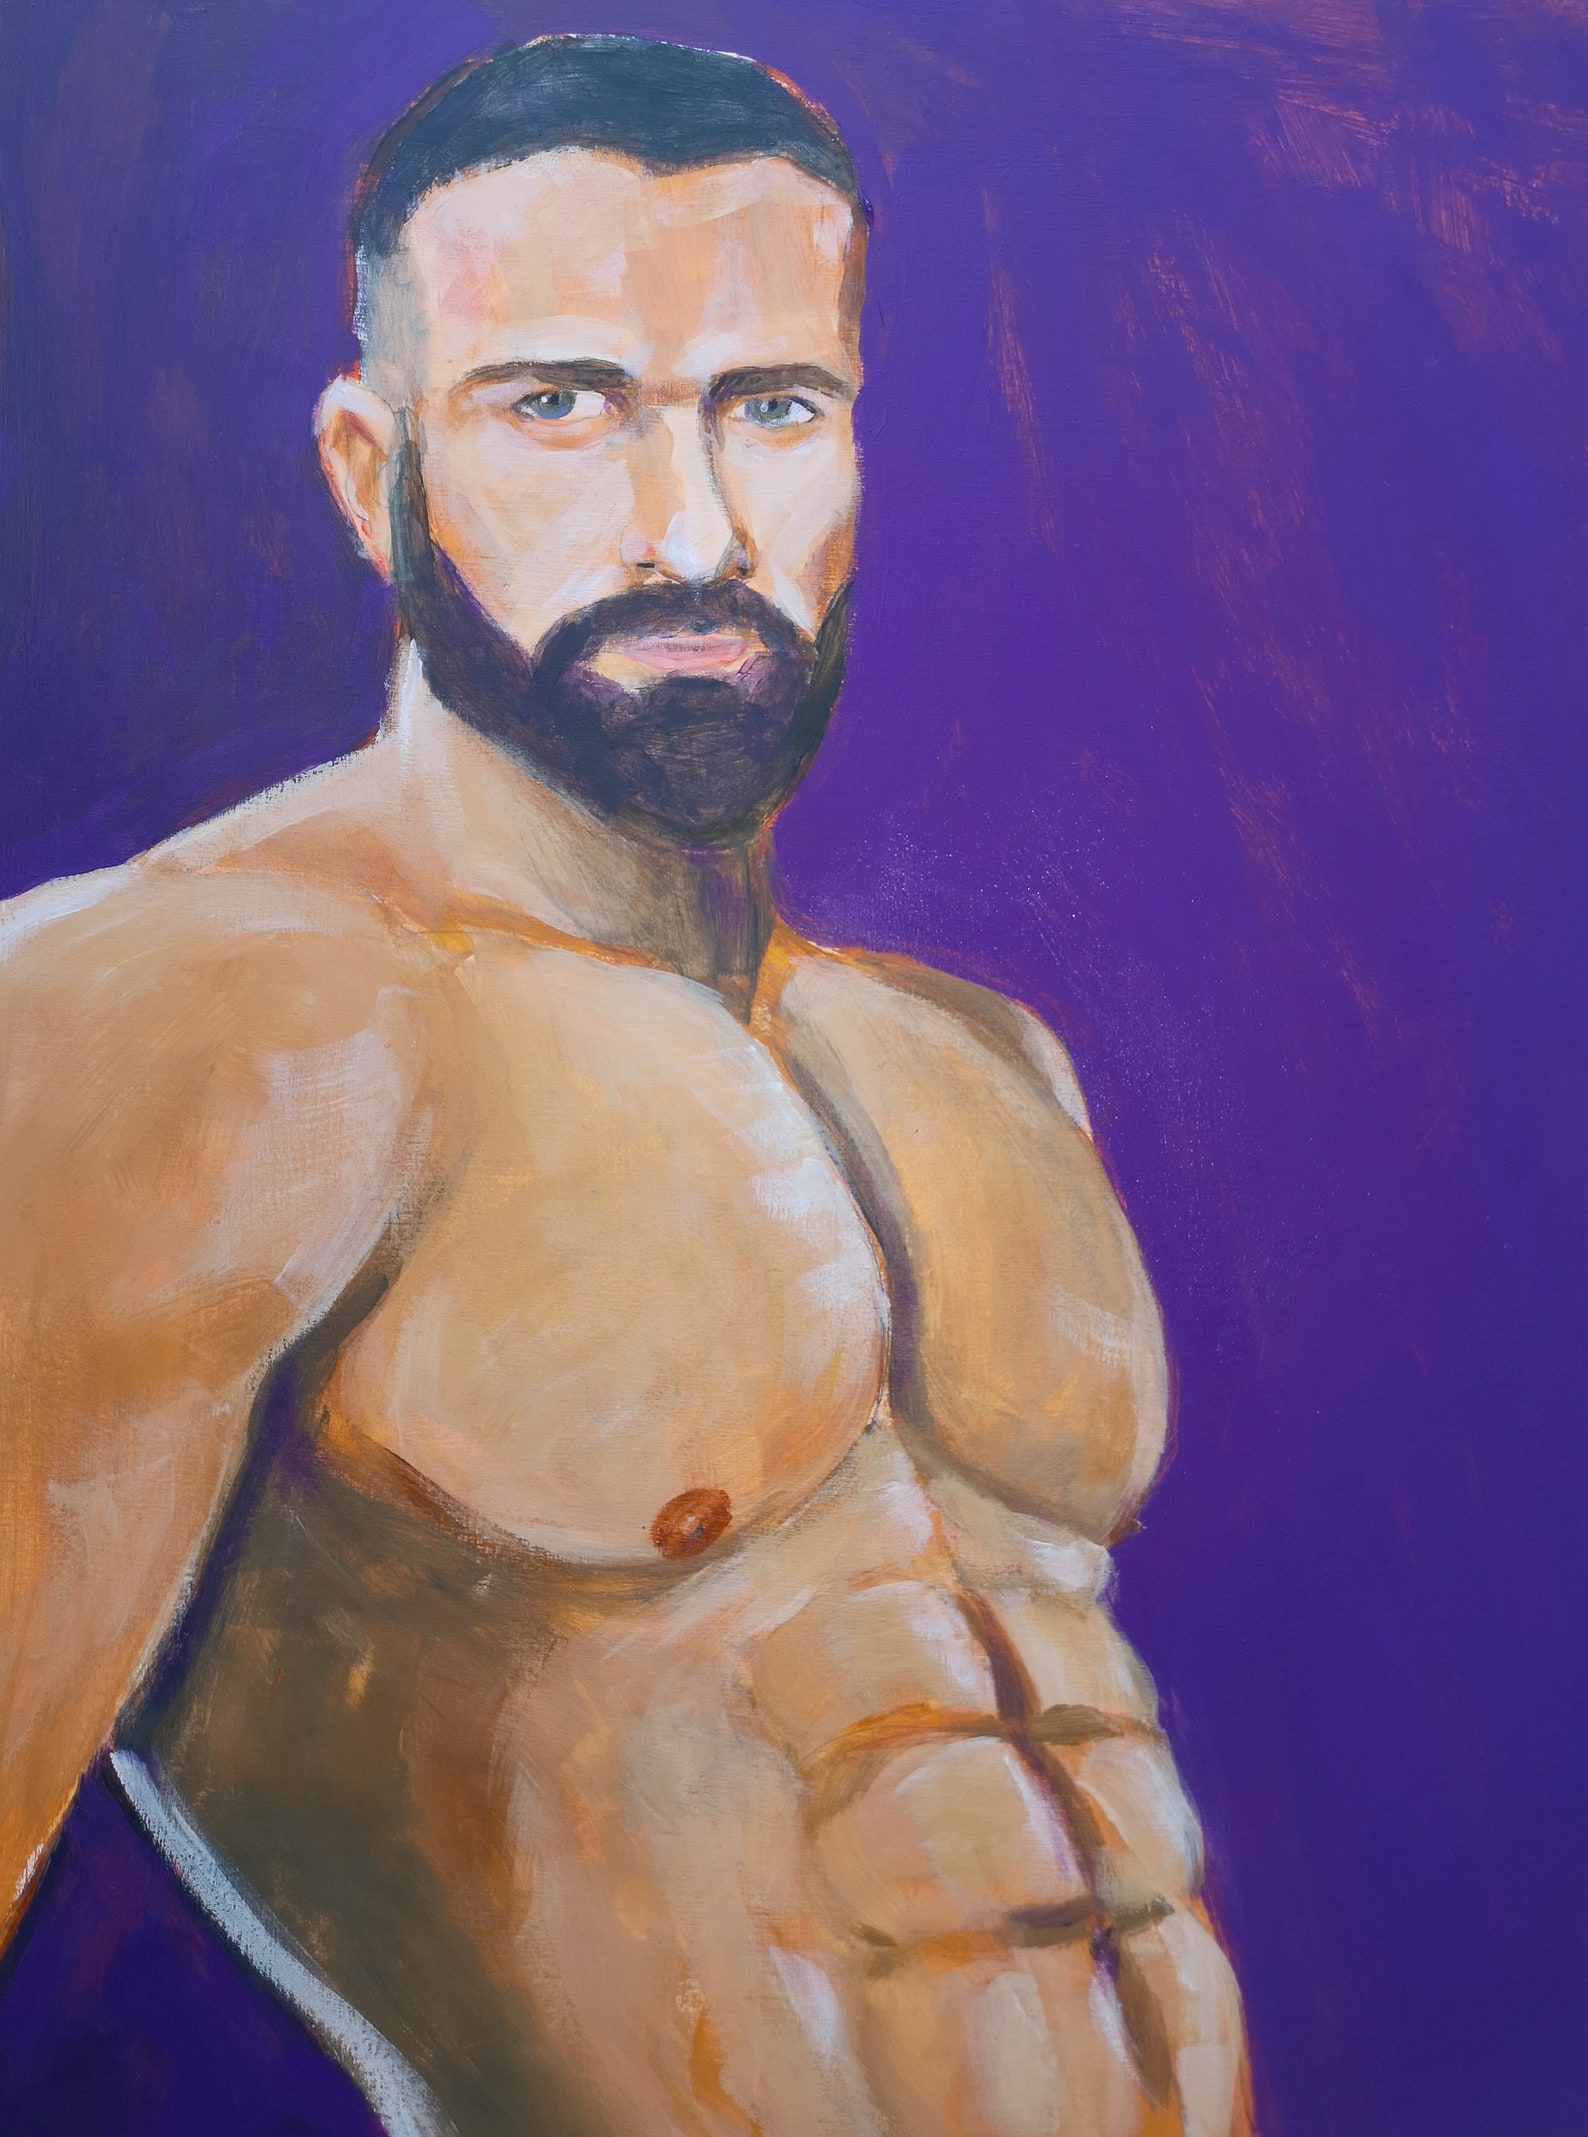 Xxl Muscular Latino Naked Muscular Body Alfa Male Gay Art Etsy